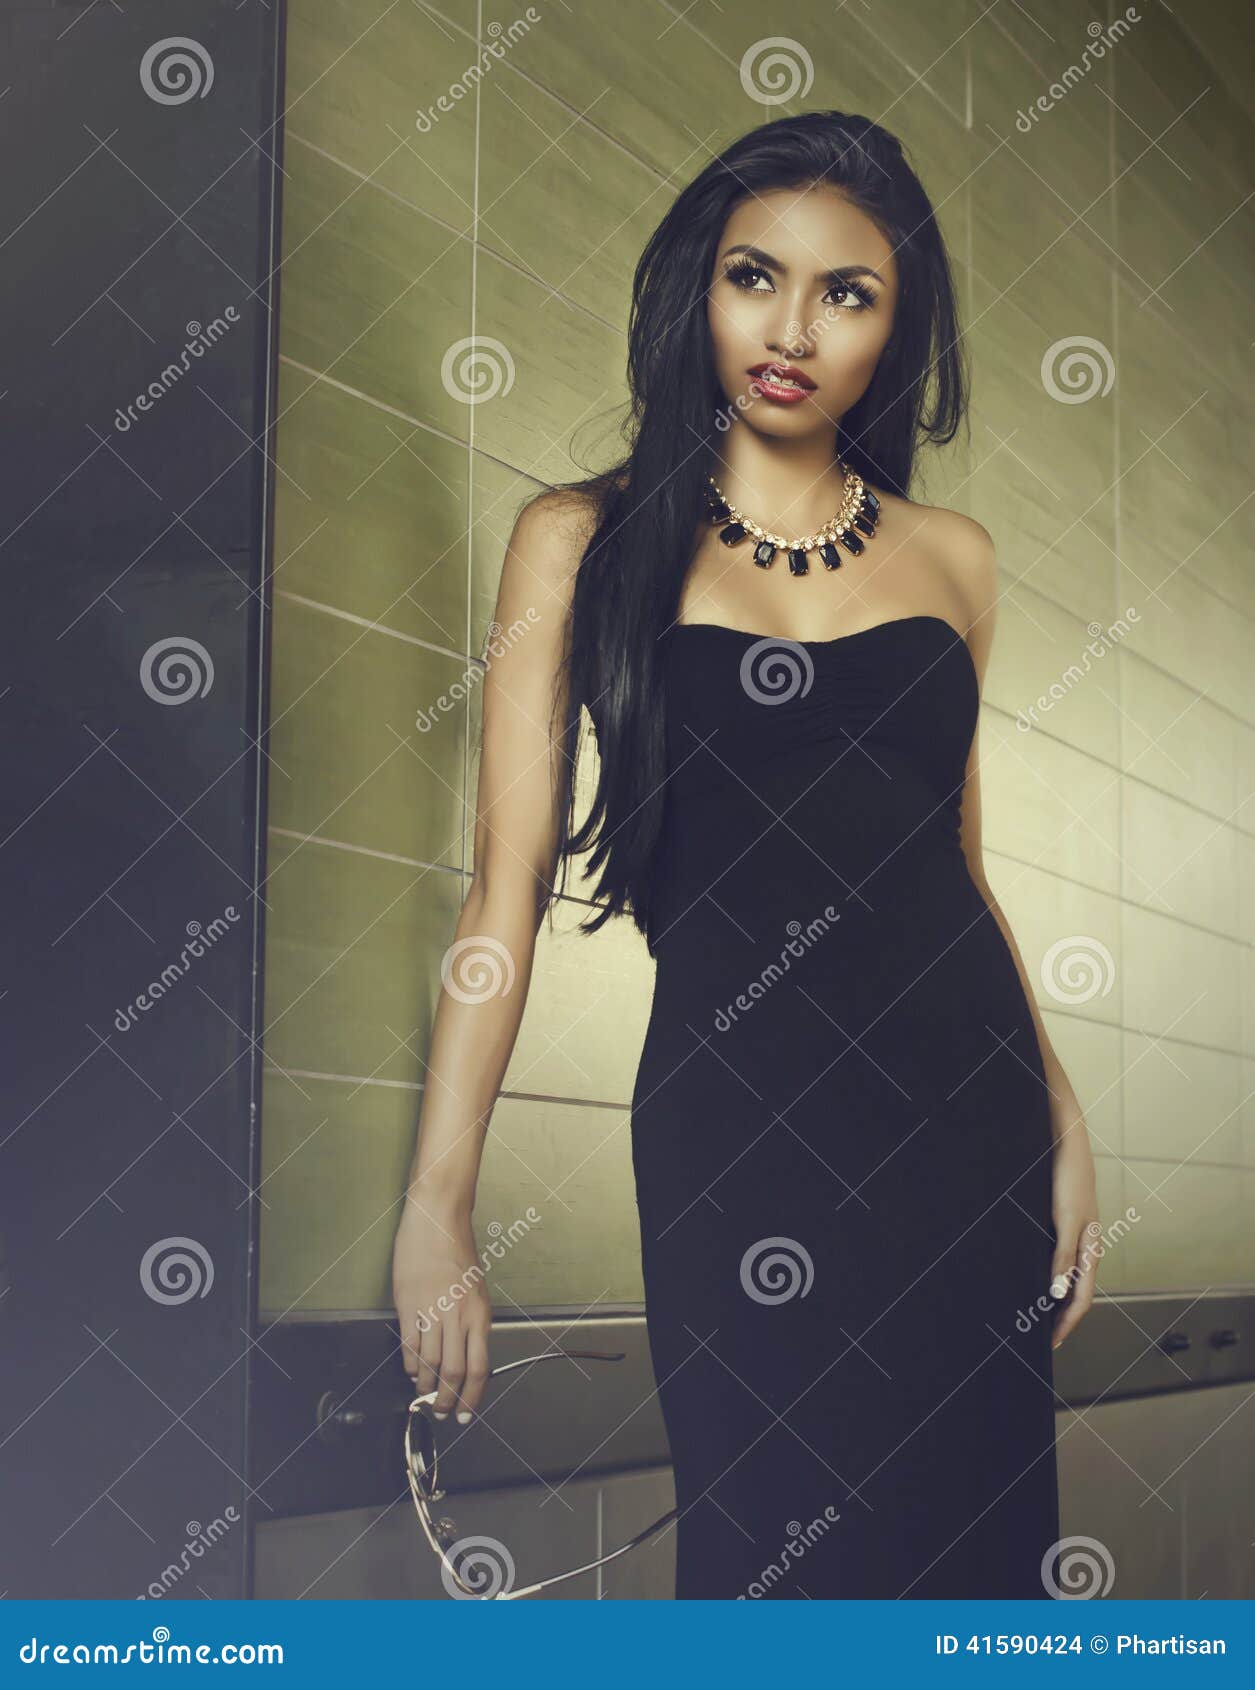 stunning fashion model chic black dress